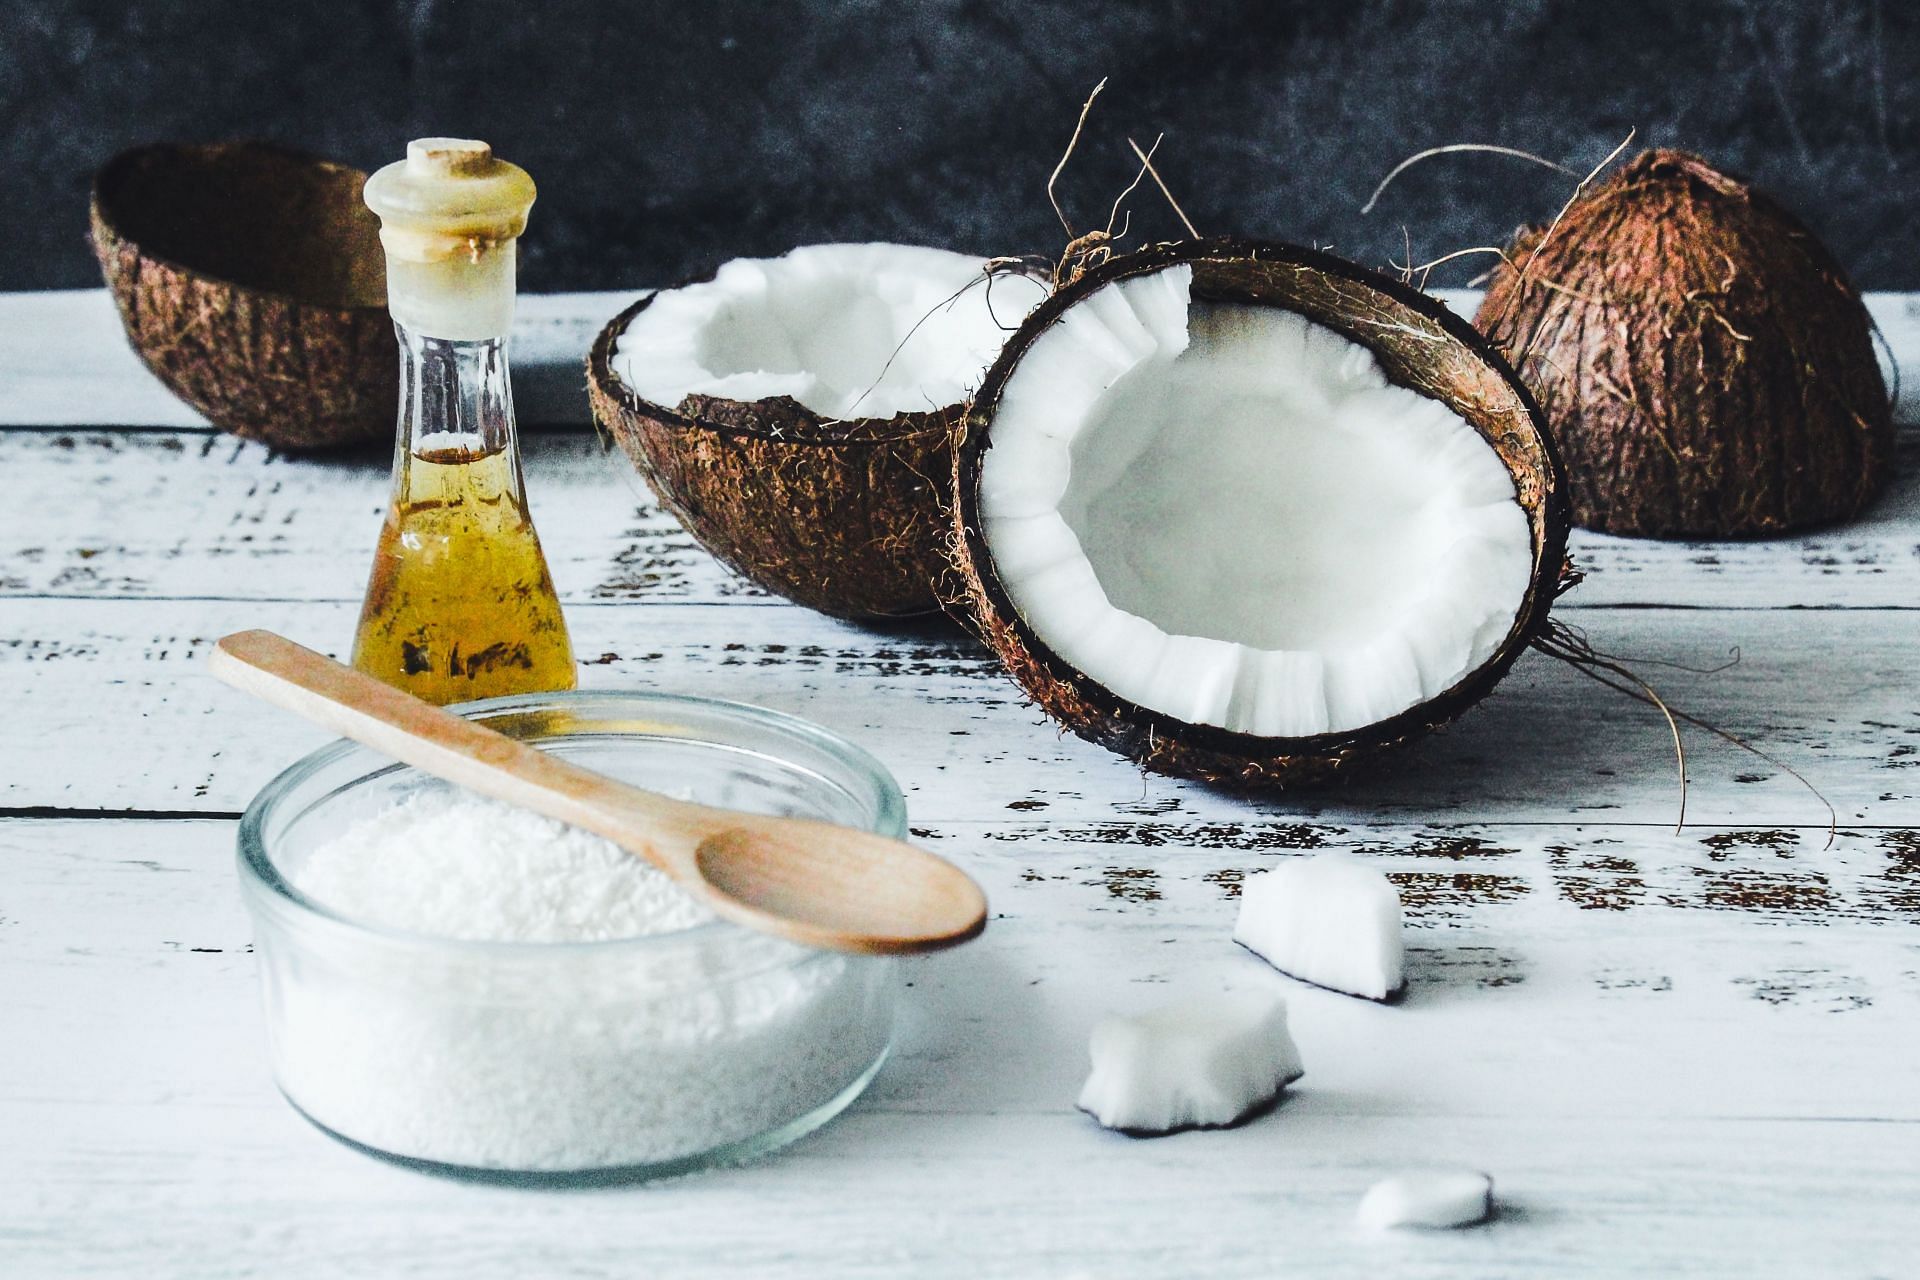 Coconut oil is among the foods with MCT (Image via Unsplash/Tijama Drndarski)